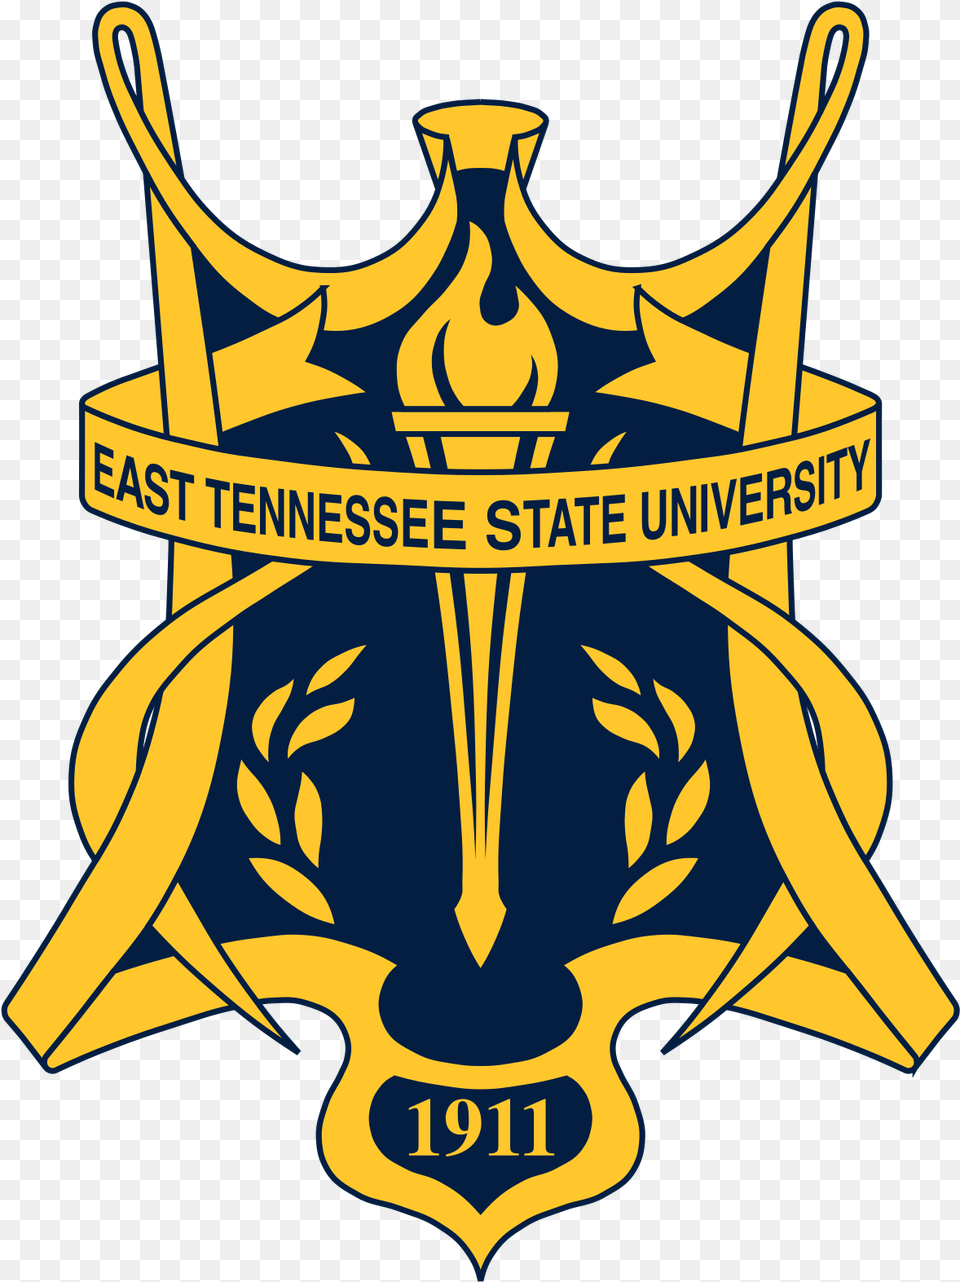 East Tennessee State University Seal, Badge, Emblem, Logo, Symbol Free Png